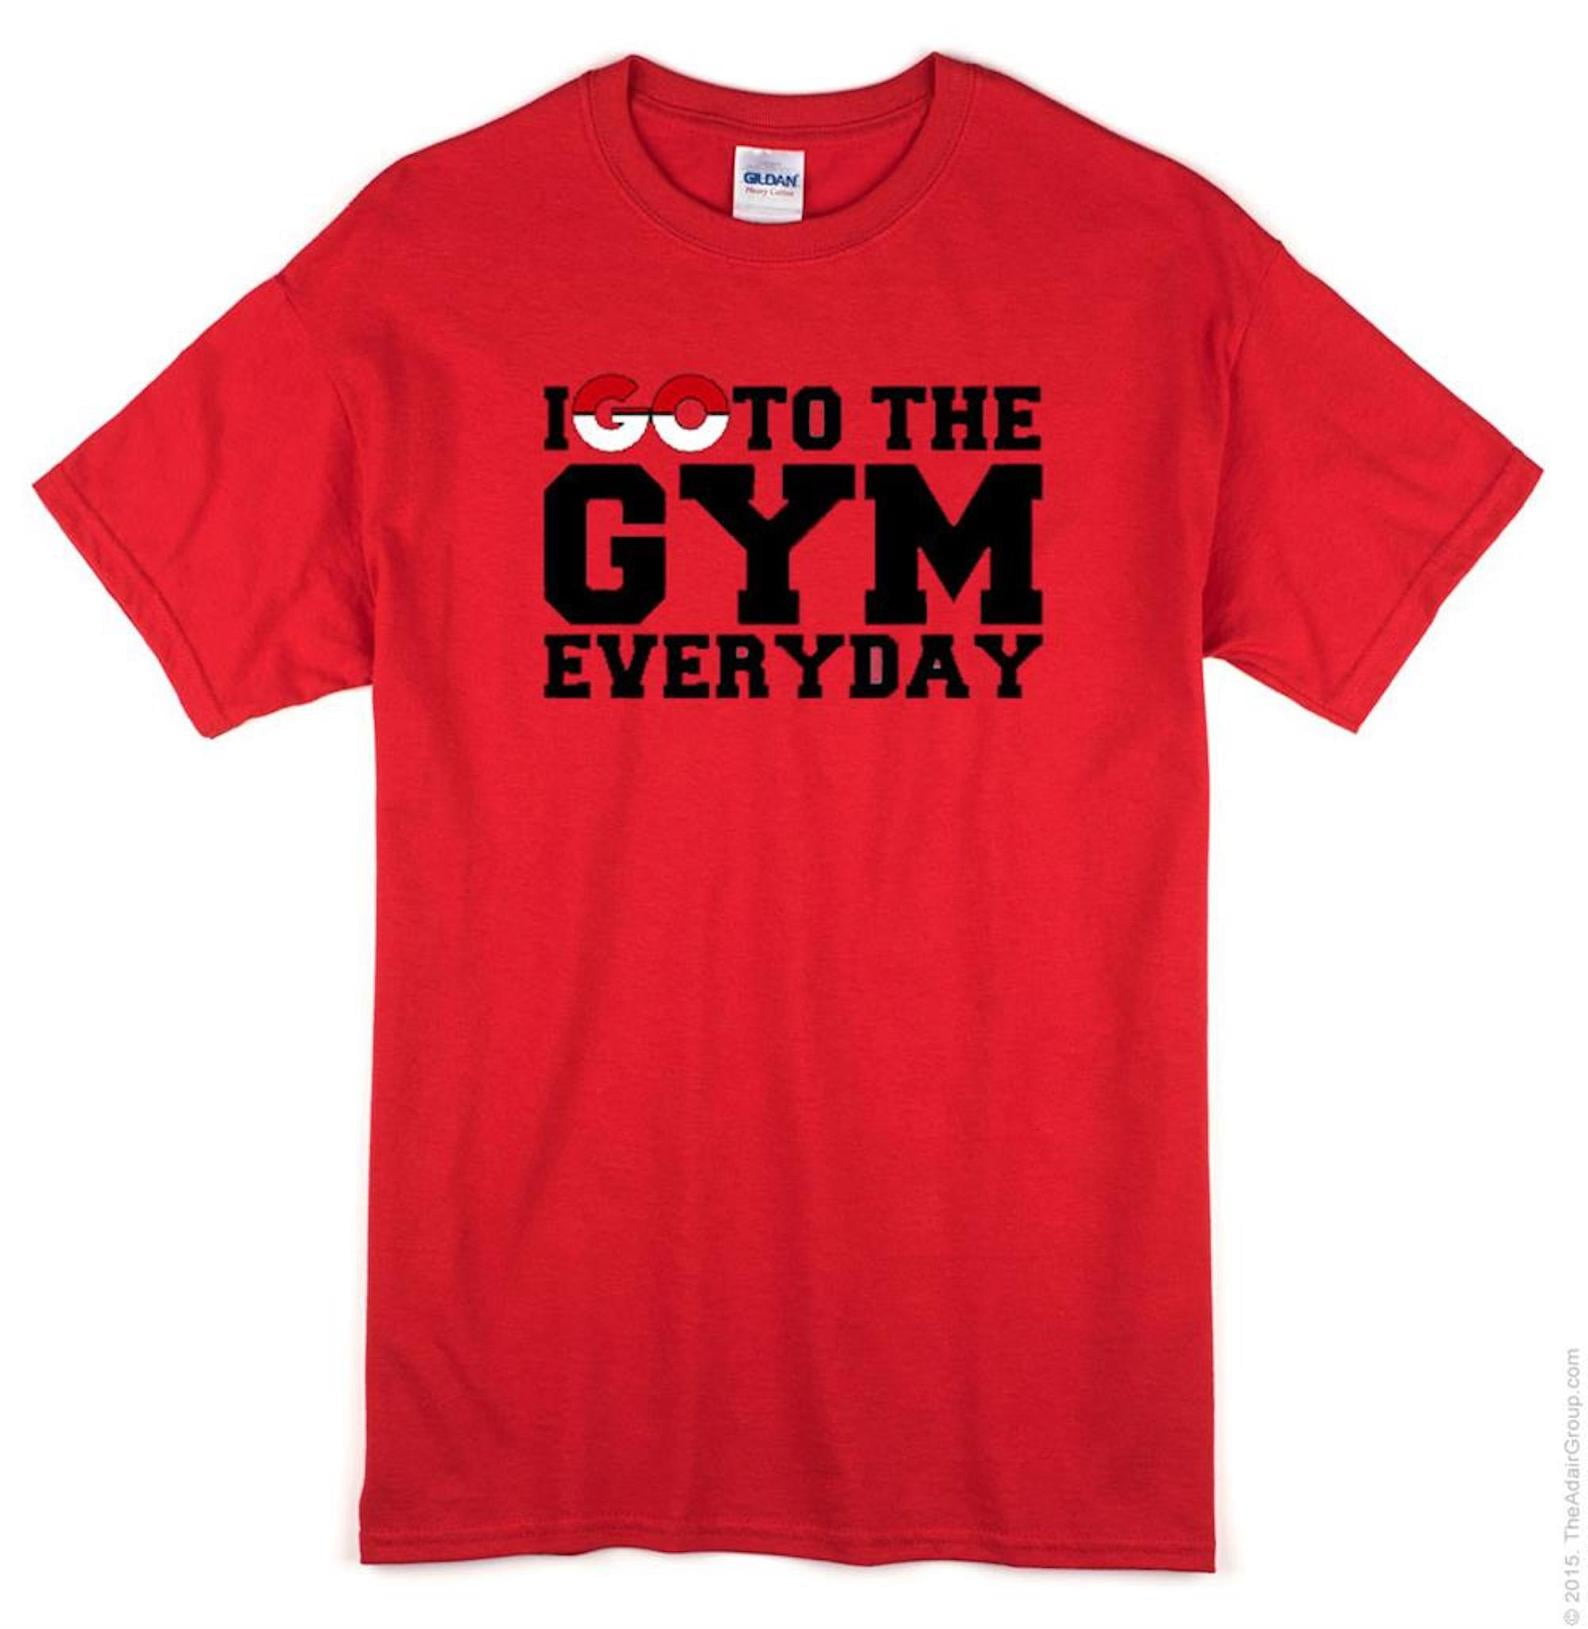 Pokémon Go Pikachu Unisex Women and Men Graphic T-shirt Go to gym Red XL -